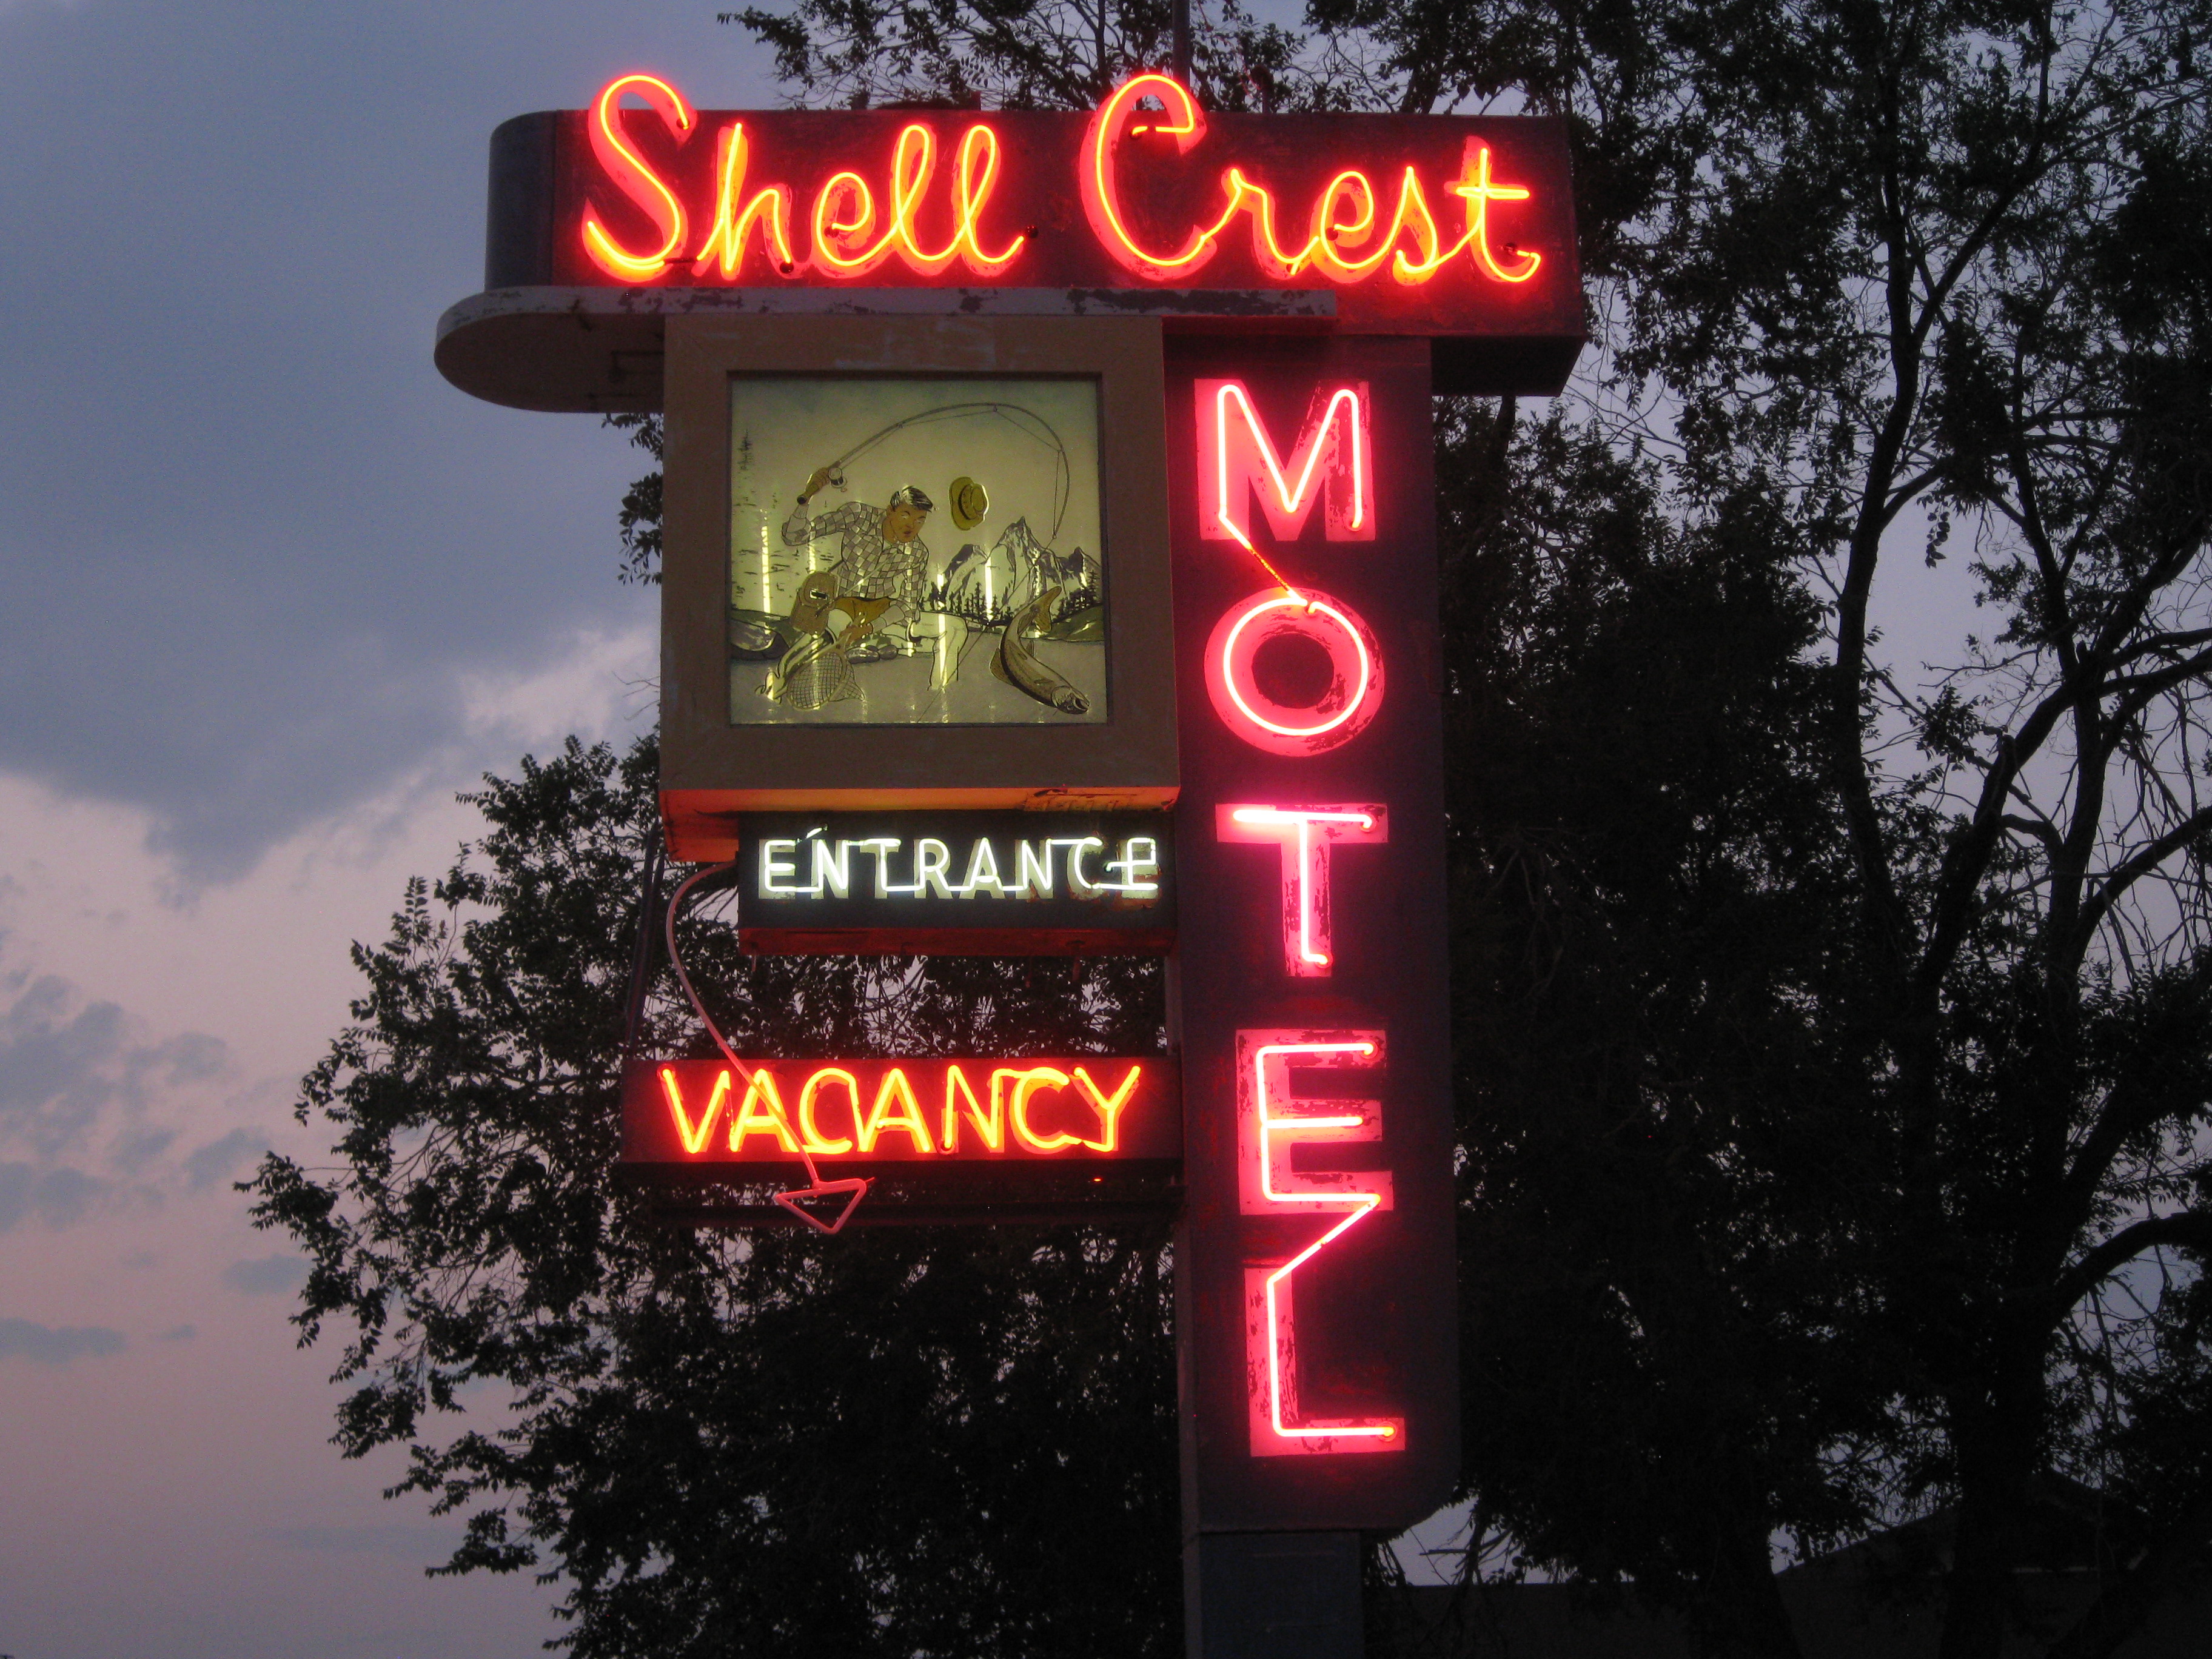 Shell Crest Motel - 573 6th Street, Wells, Nevada U.S.A. - August 1, 2018